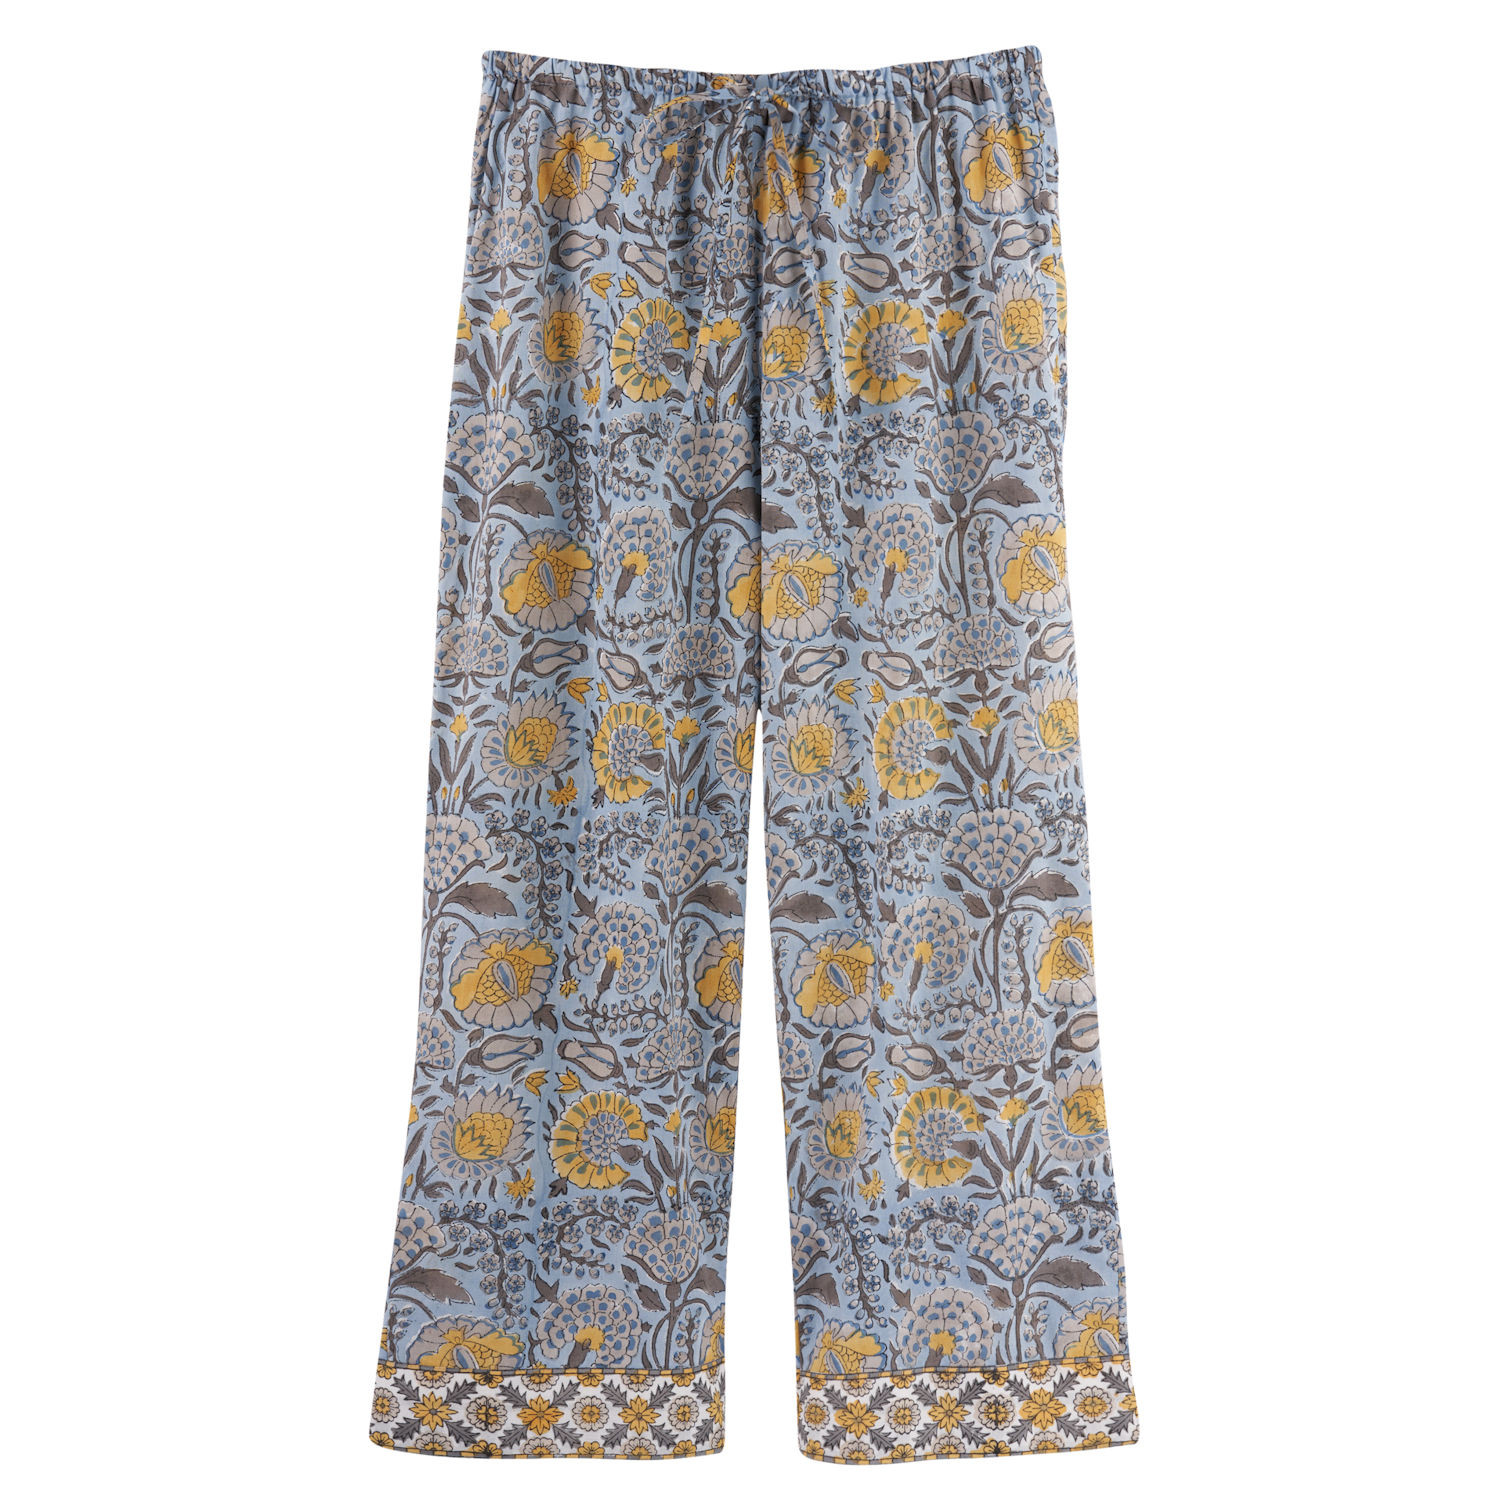 Womens Capri Pajama Pants Lounge Causal Bottoms Fun Print Sleep Pants  SK001-Blue Star-XL